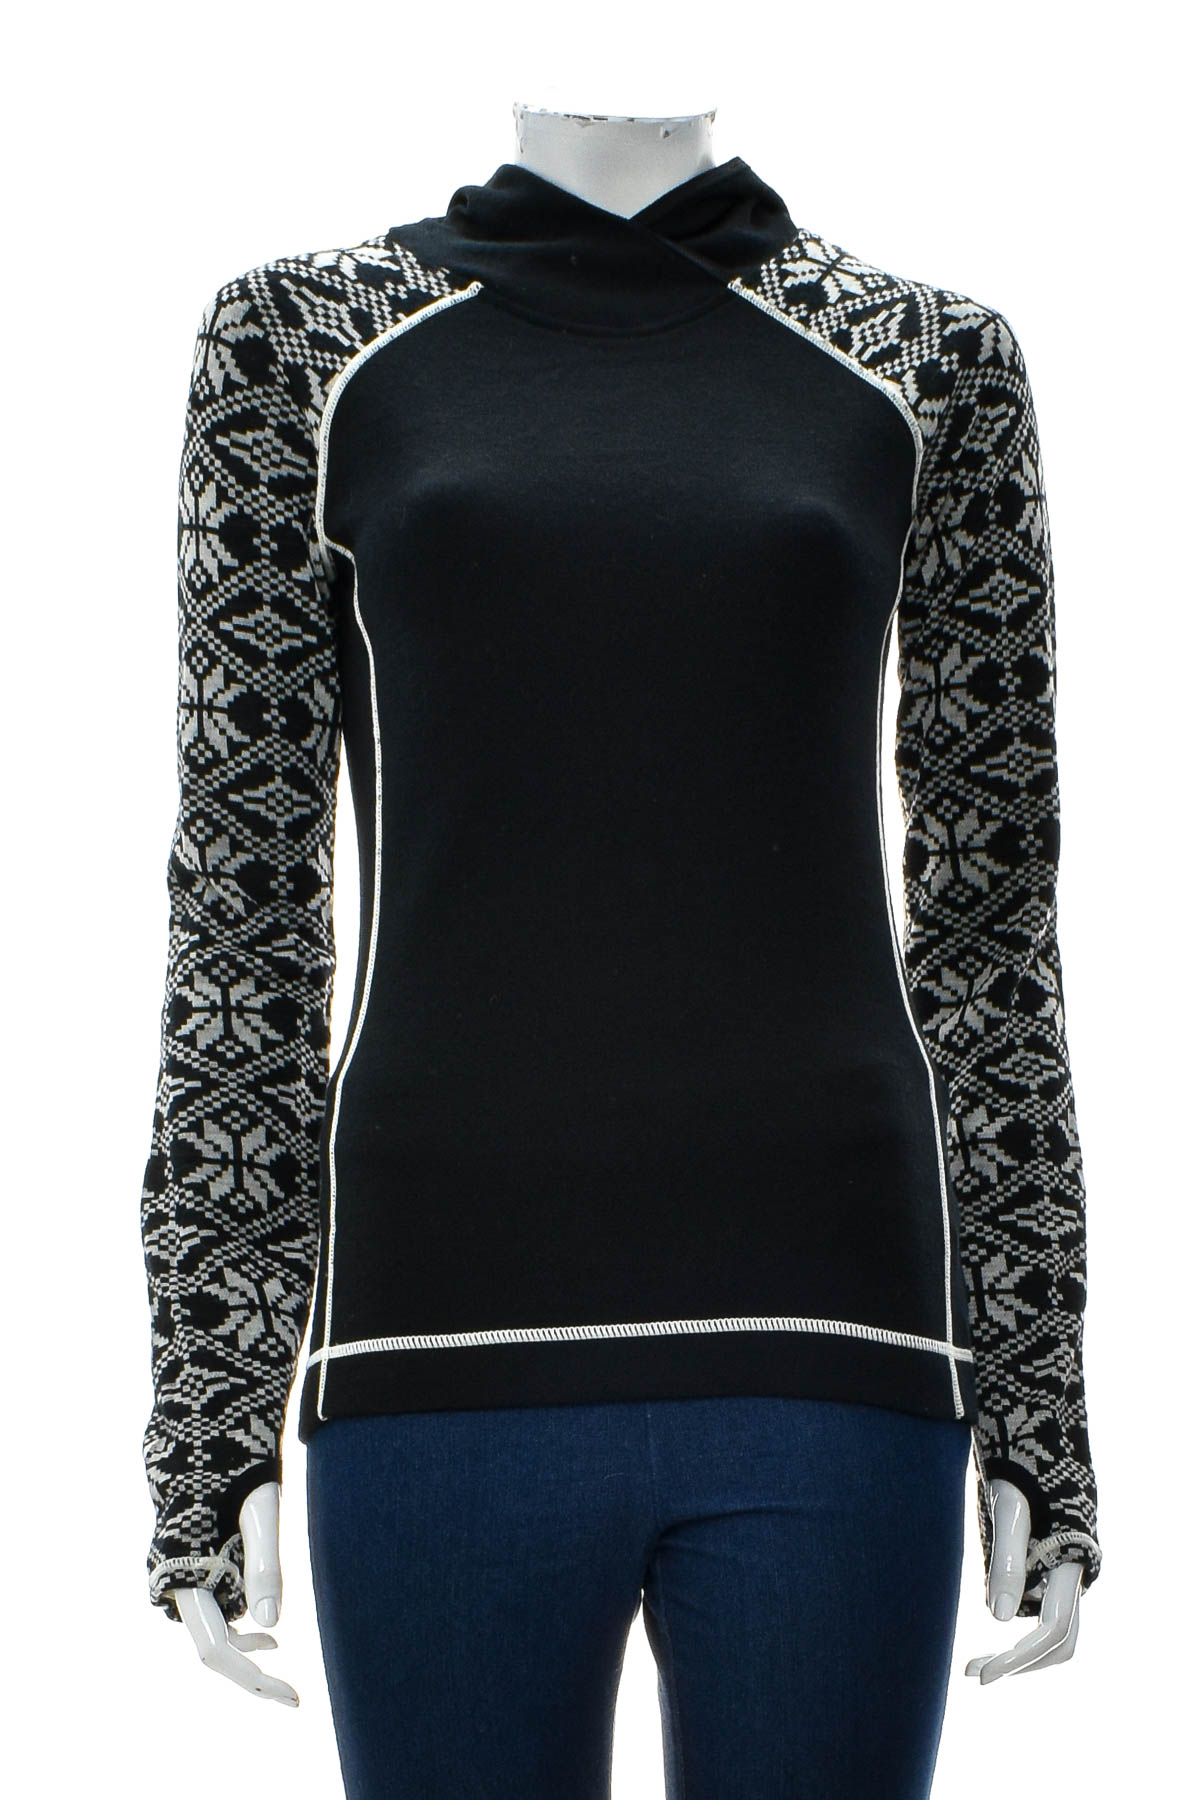 Women's sport blouse - Telluride Clothing Company - 0